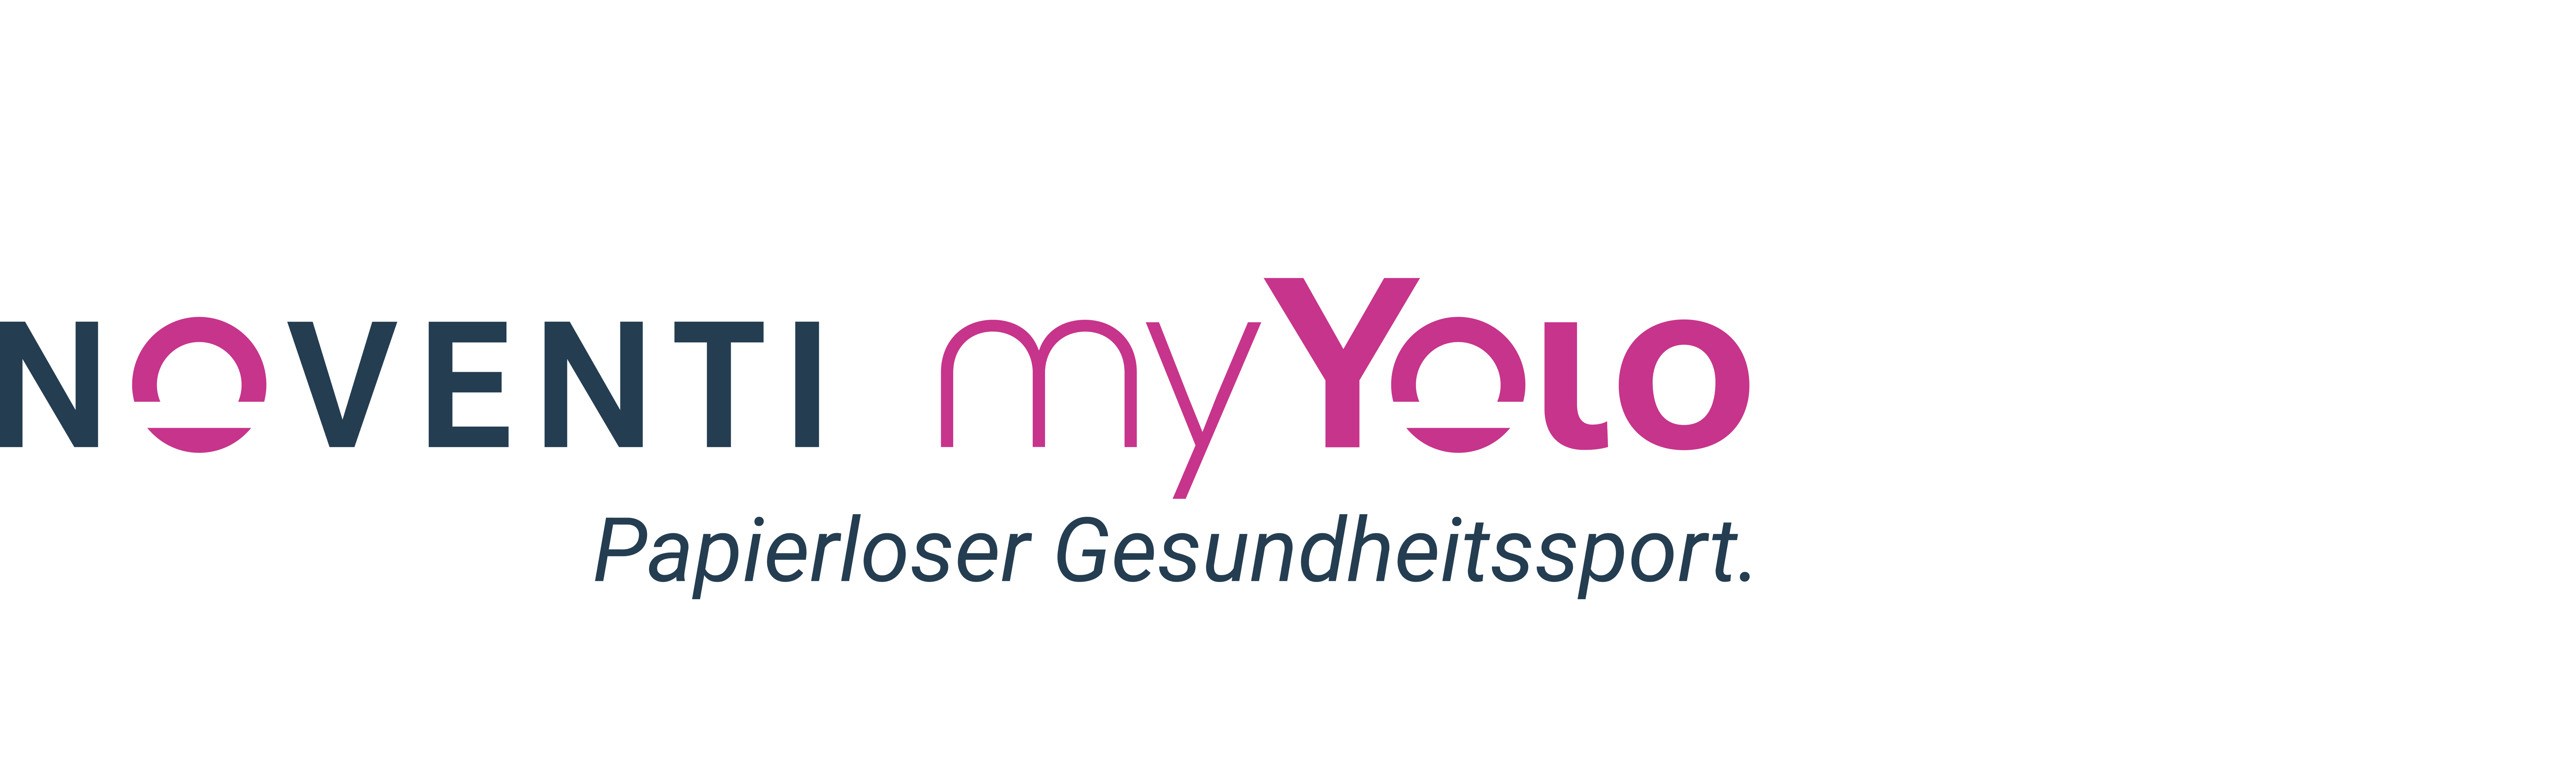 Logo_nhc_myYolo2_RGB_NEW-1